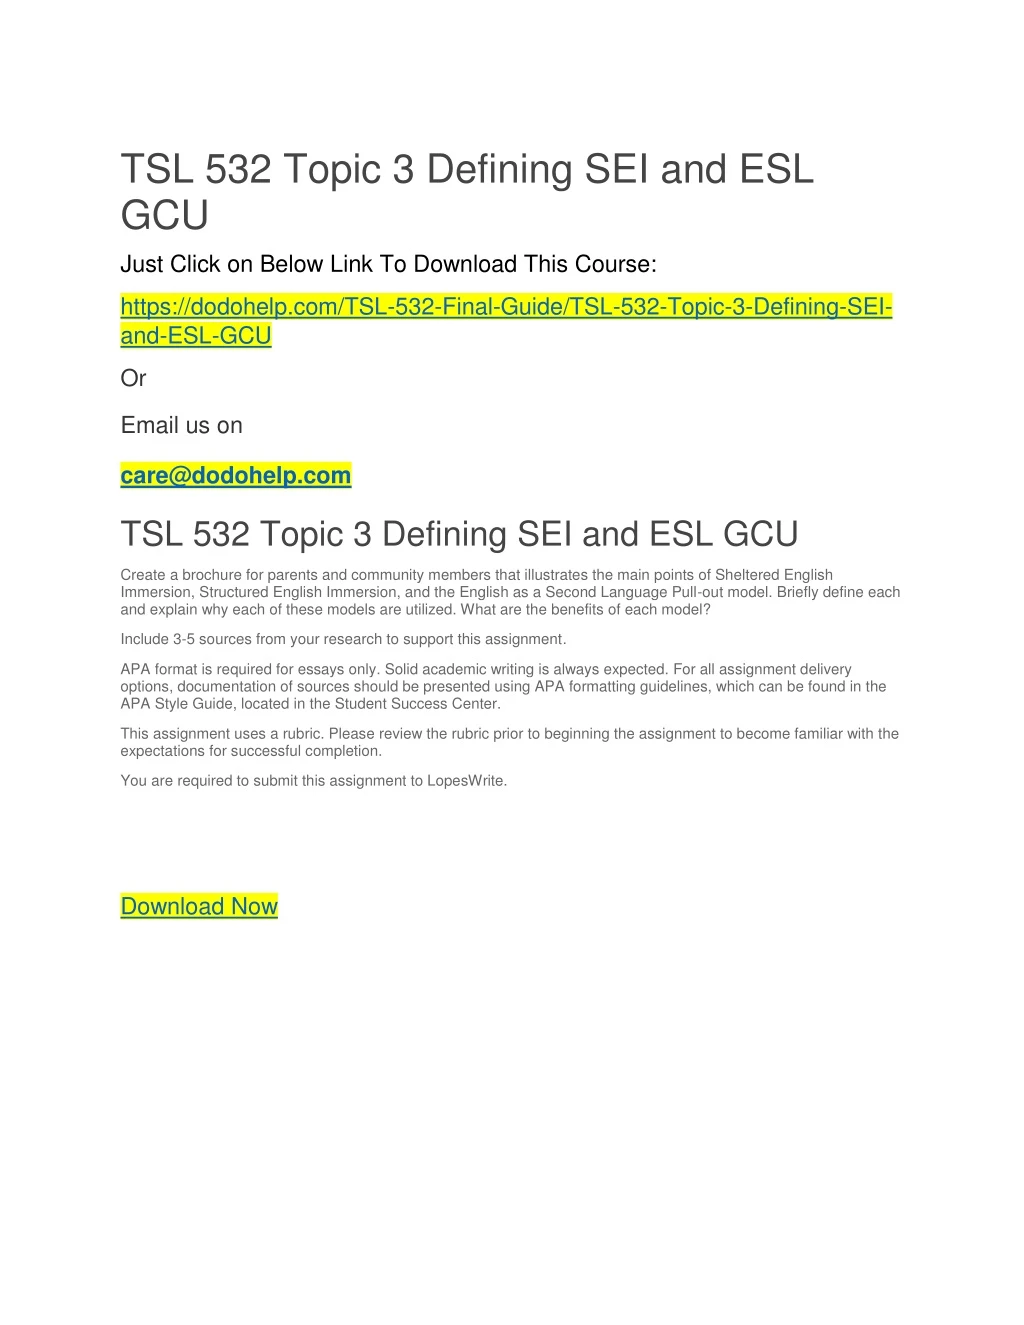 tsl 532 topic 3 defining sei and esl gcu just